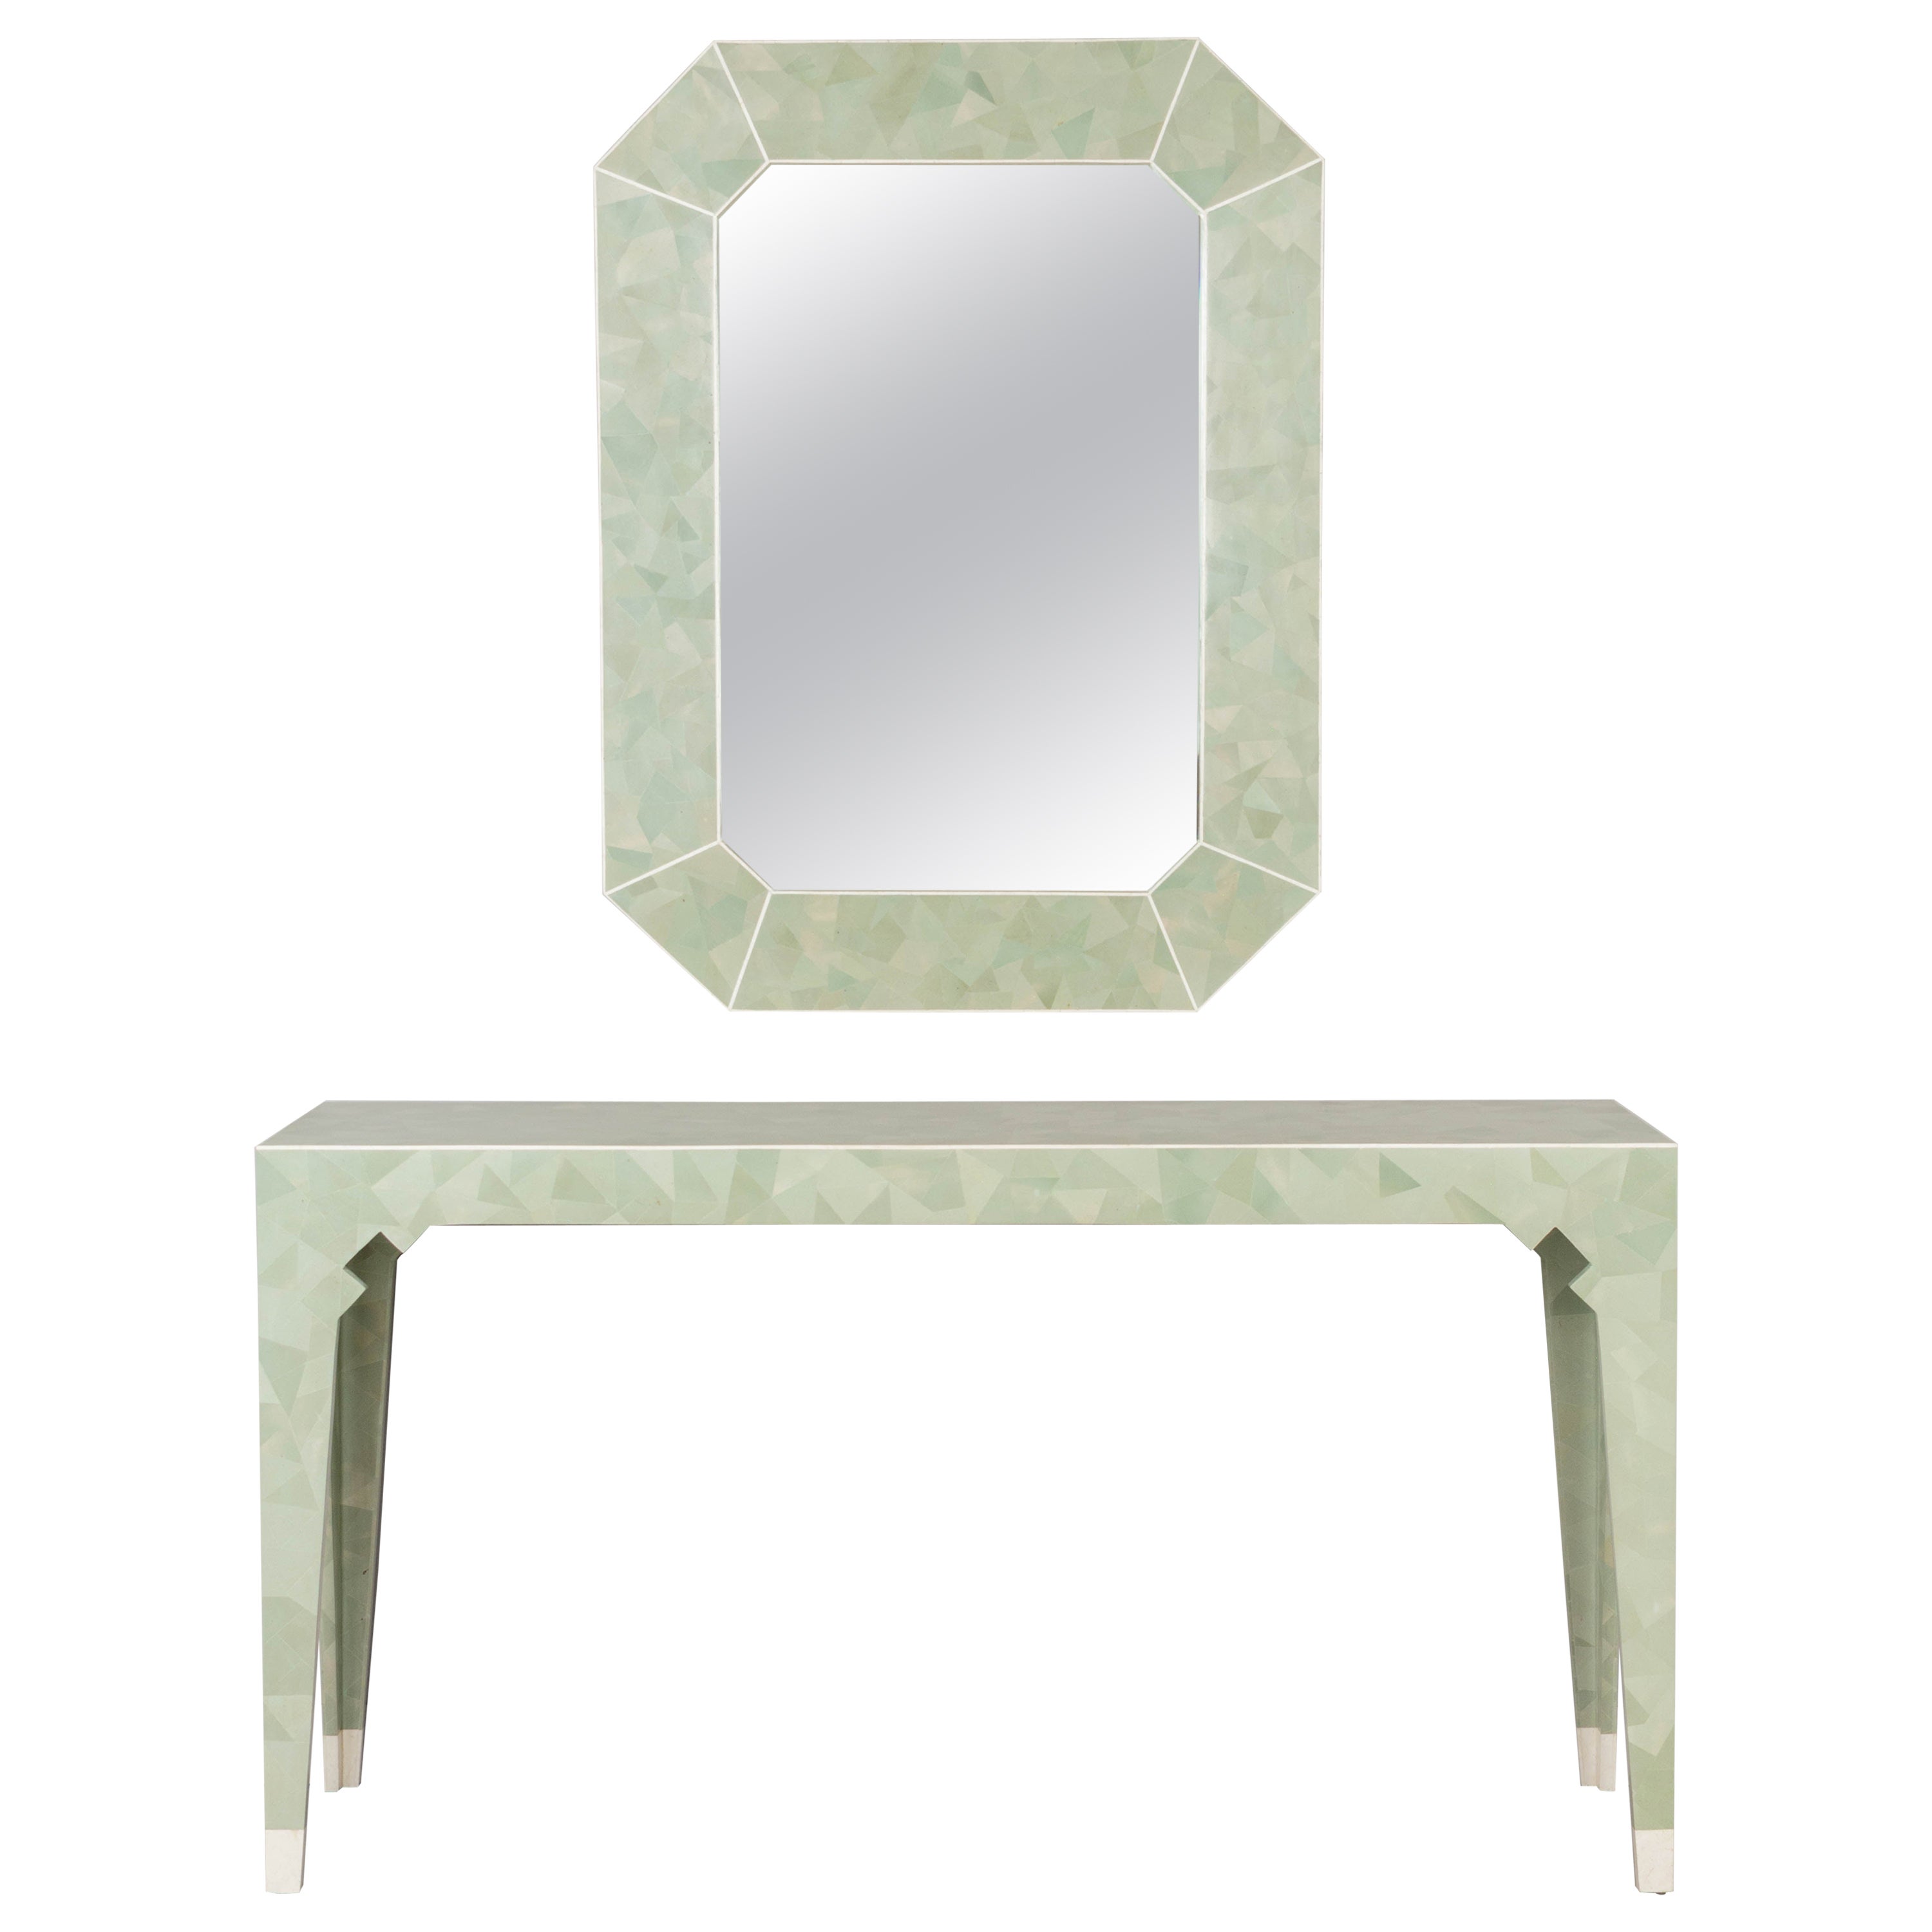 Oggetti Tessellated Stone Console Table & Mirror